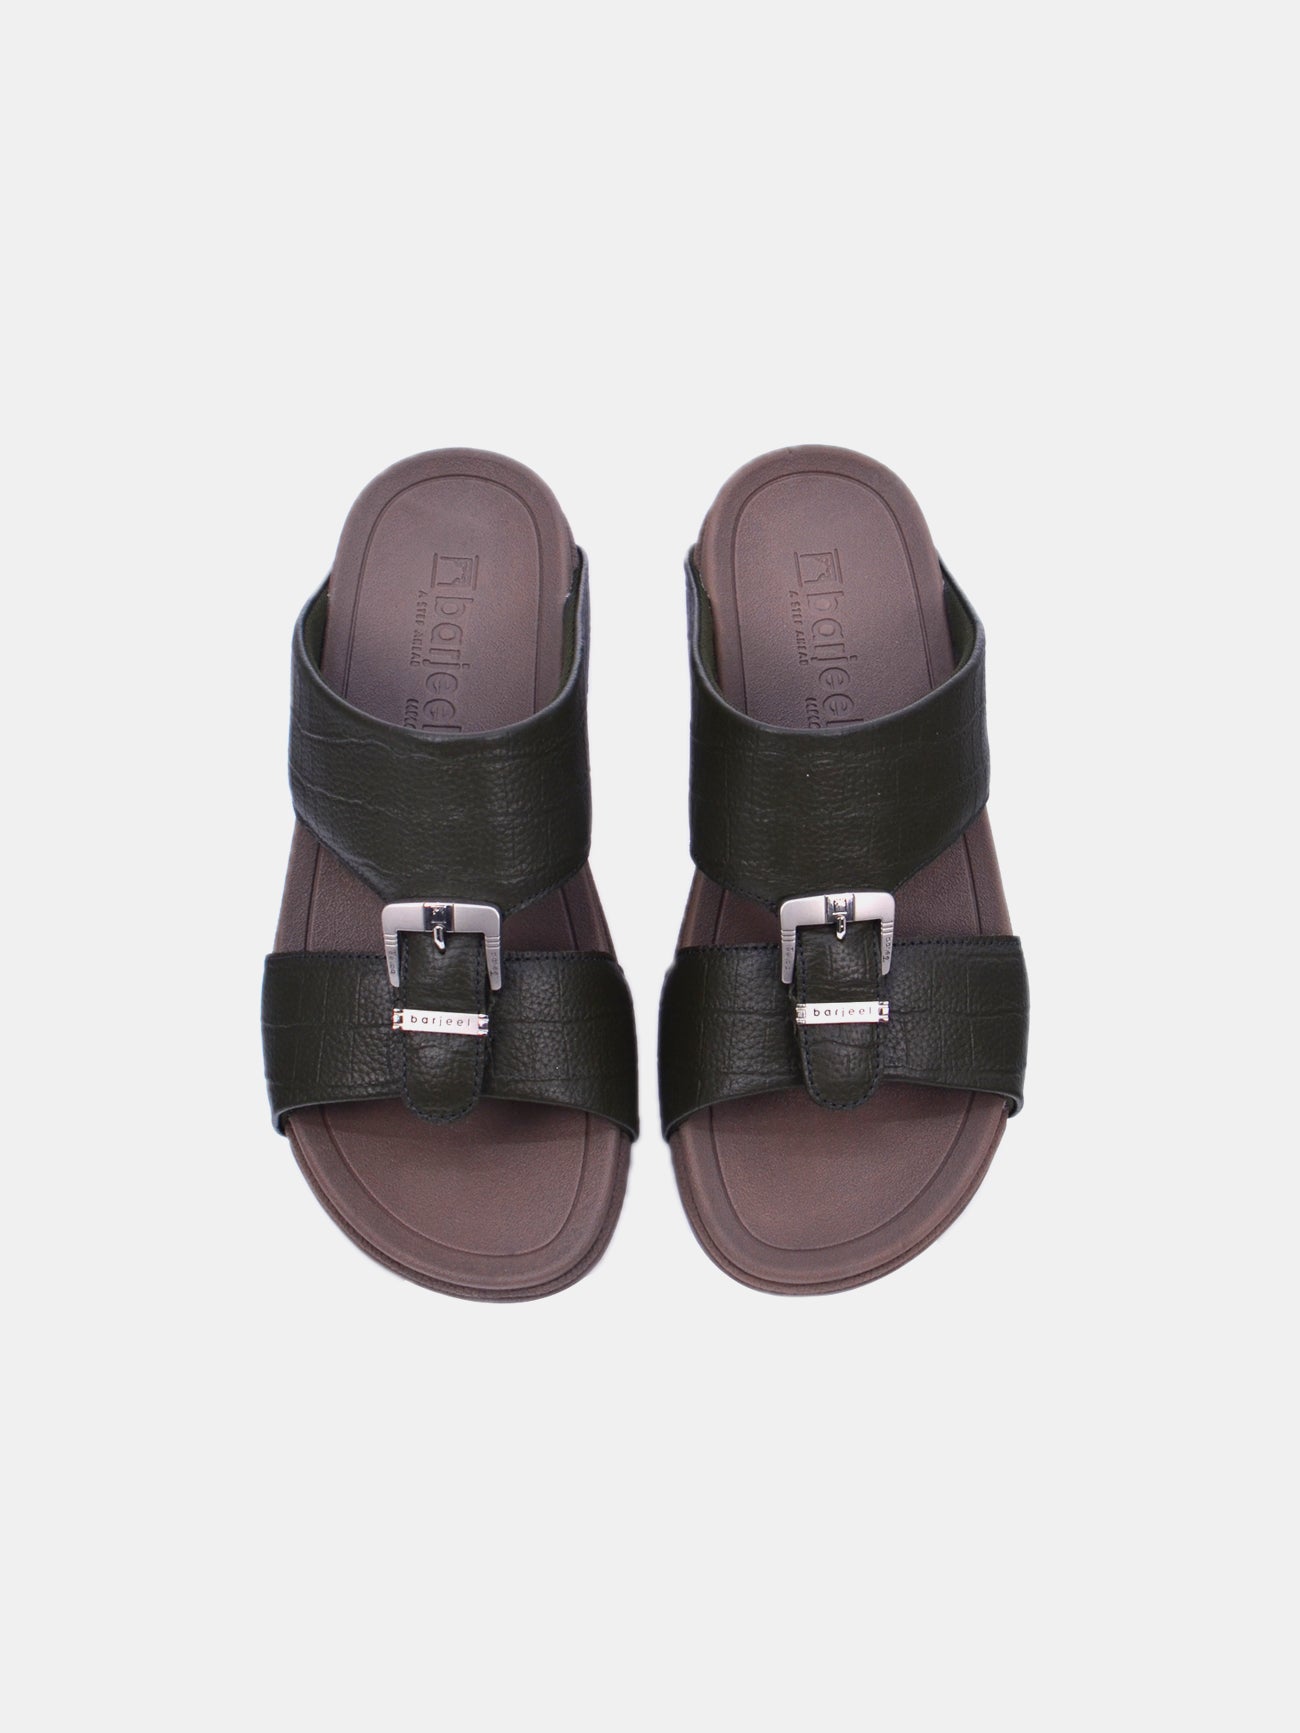 Barjeel Uno 20295 Men's Arabic Sandals #color_Green